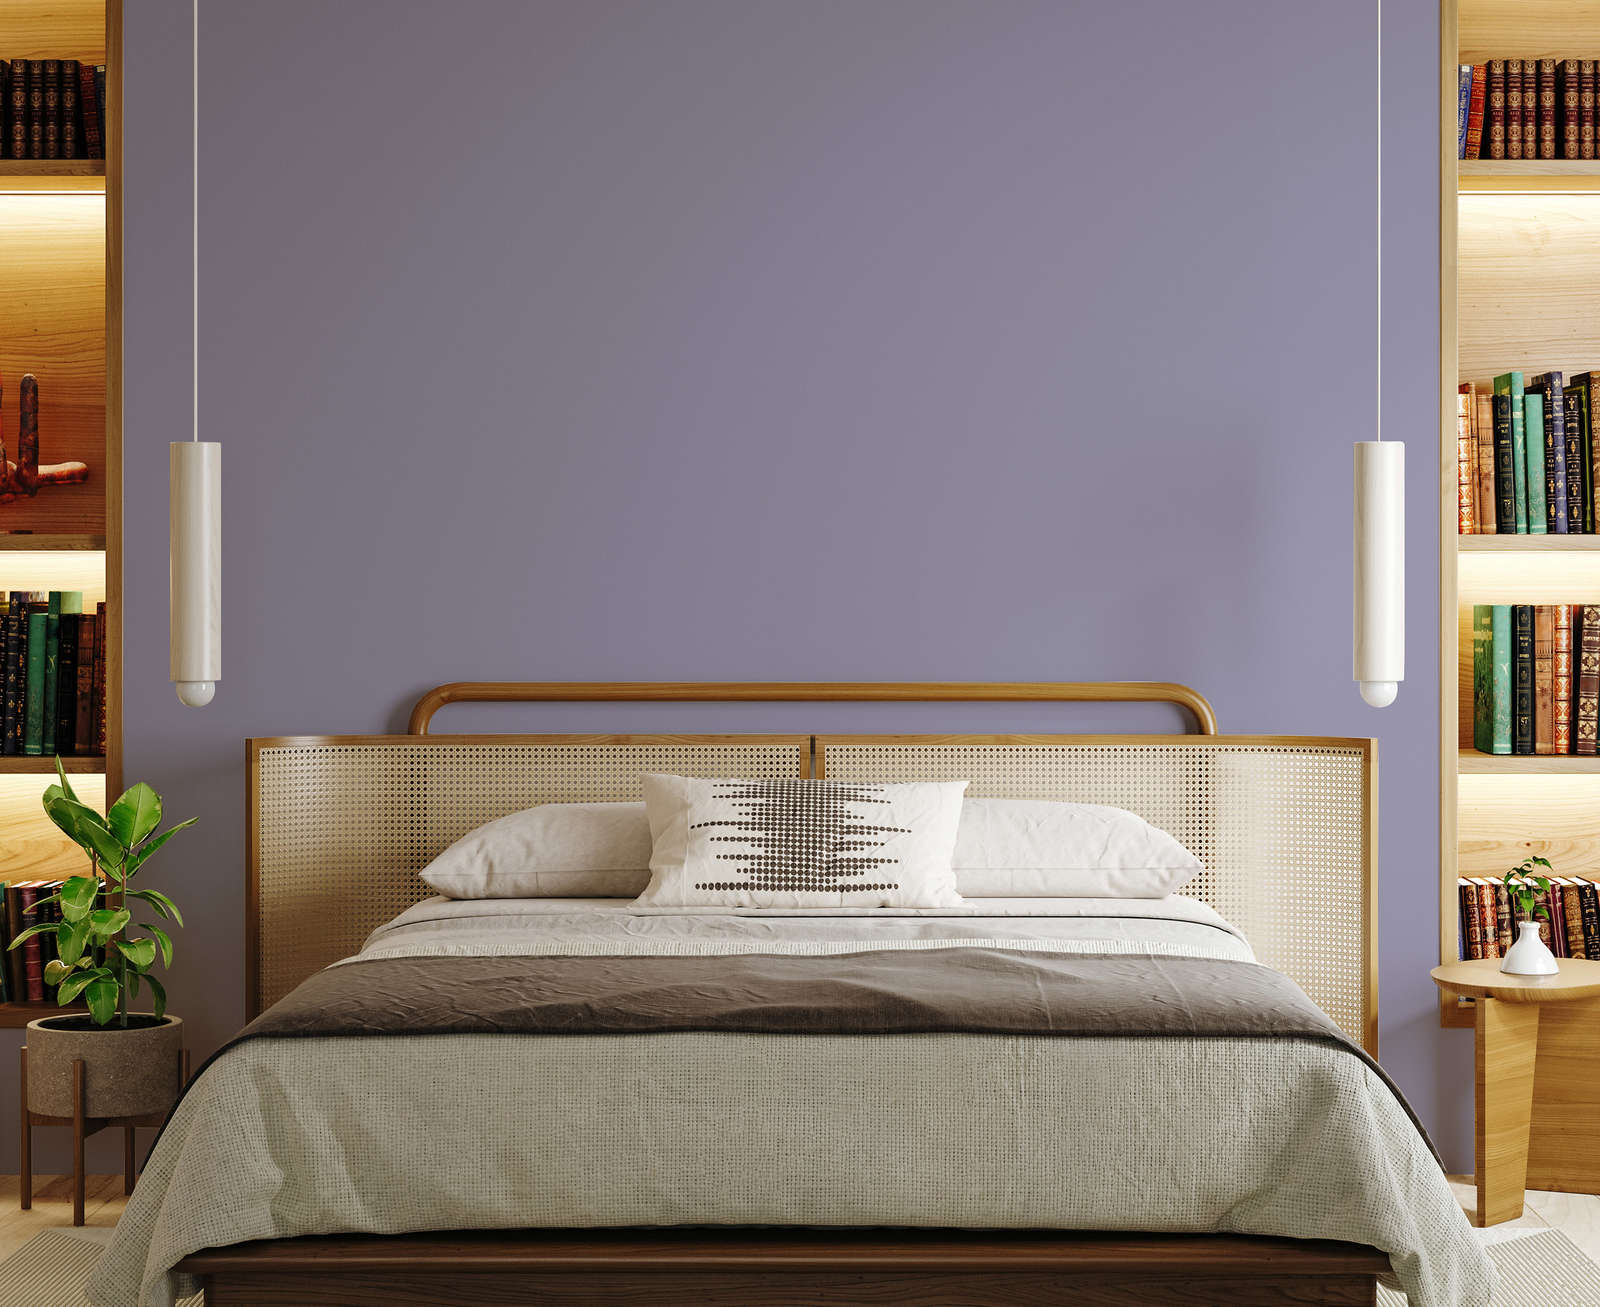             Pittura murale Premium Sensitive Lilac »Magical Mauve« NW204 – 2,5 litri
        